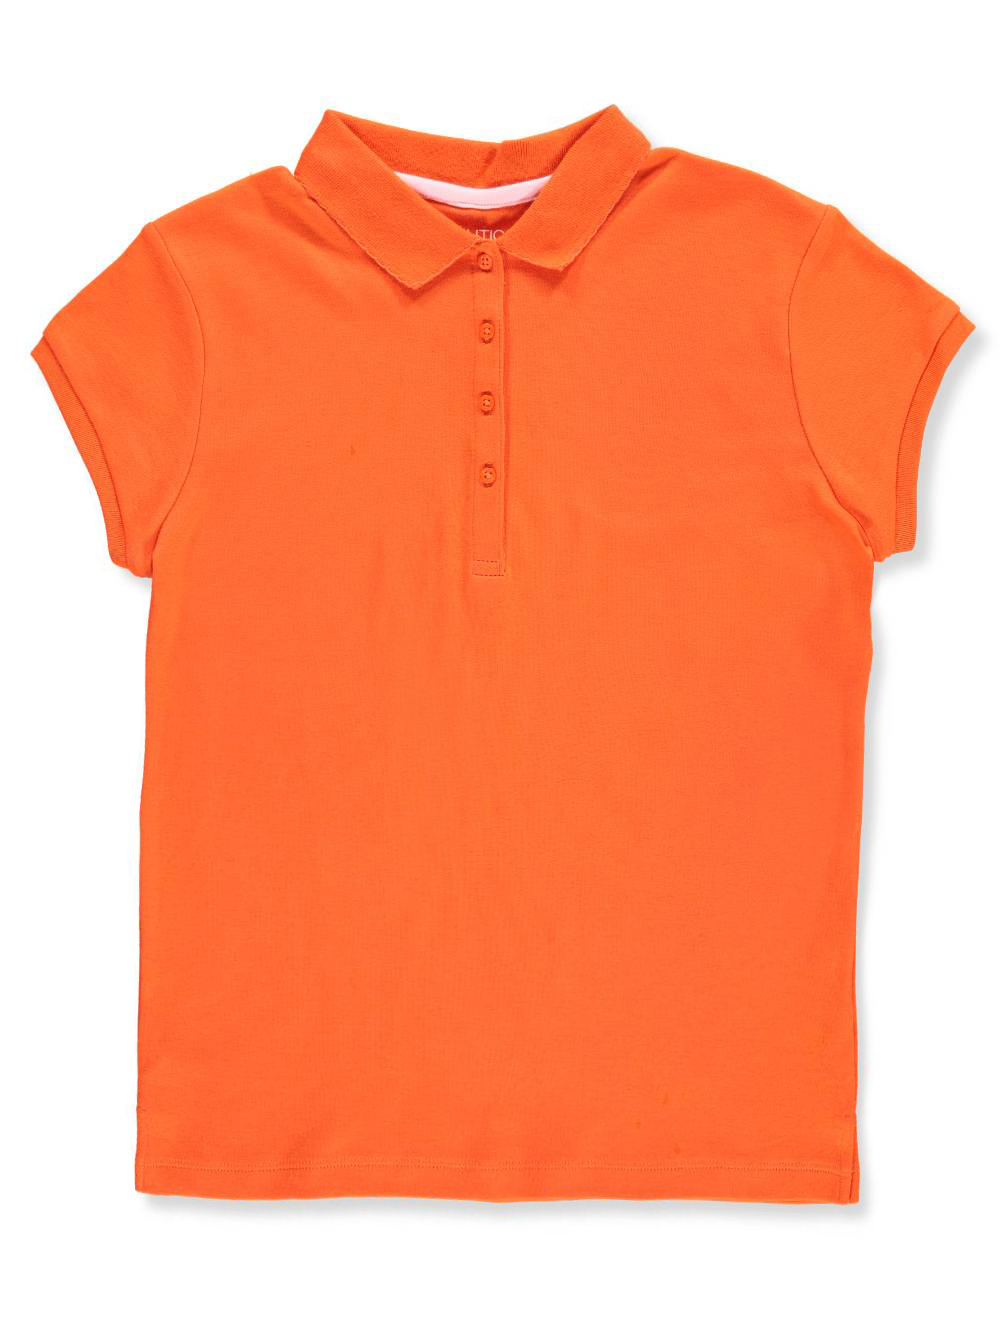 Orange Tops